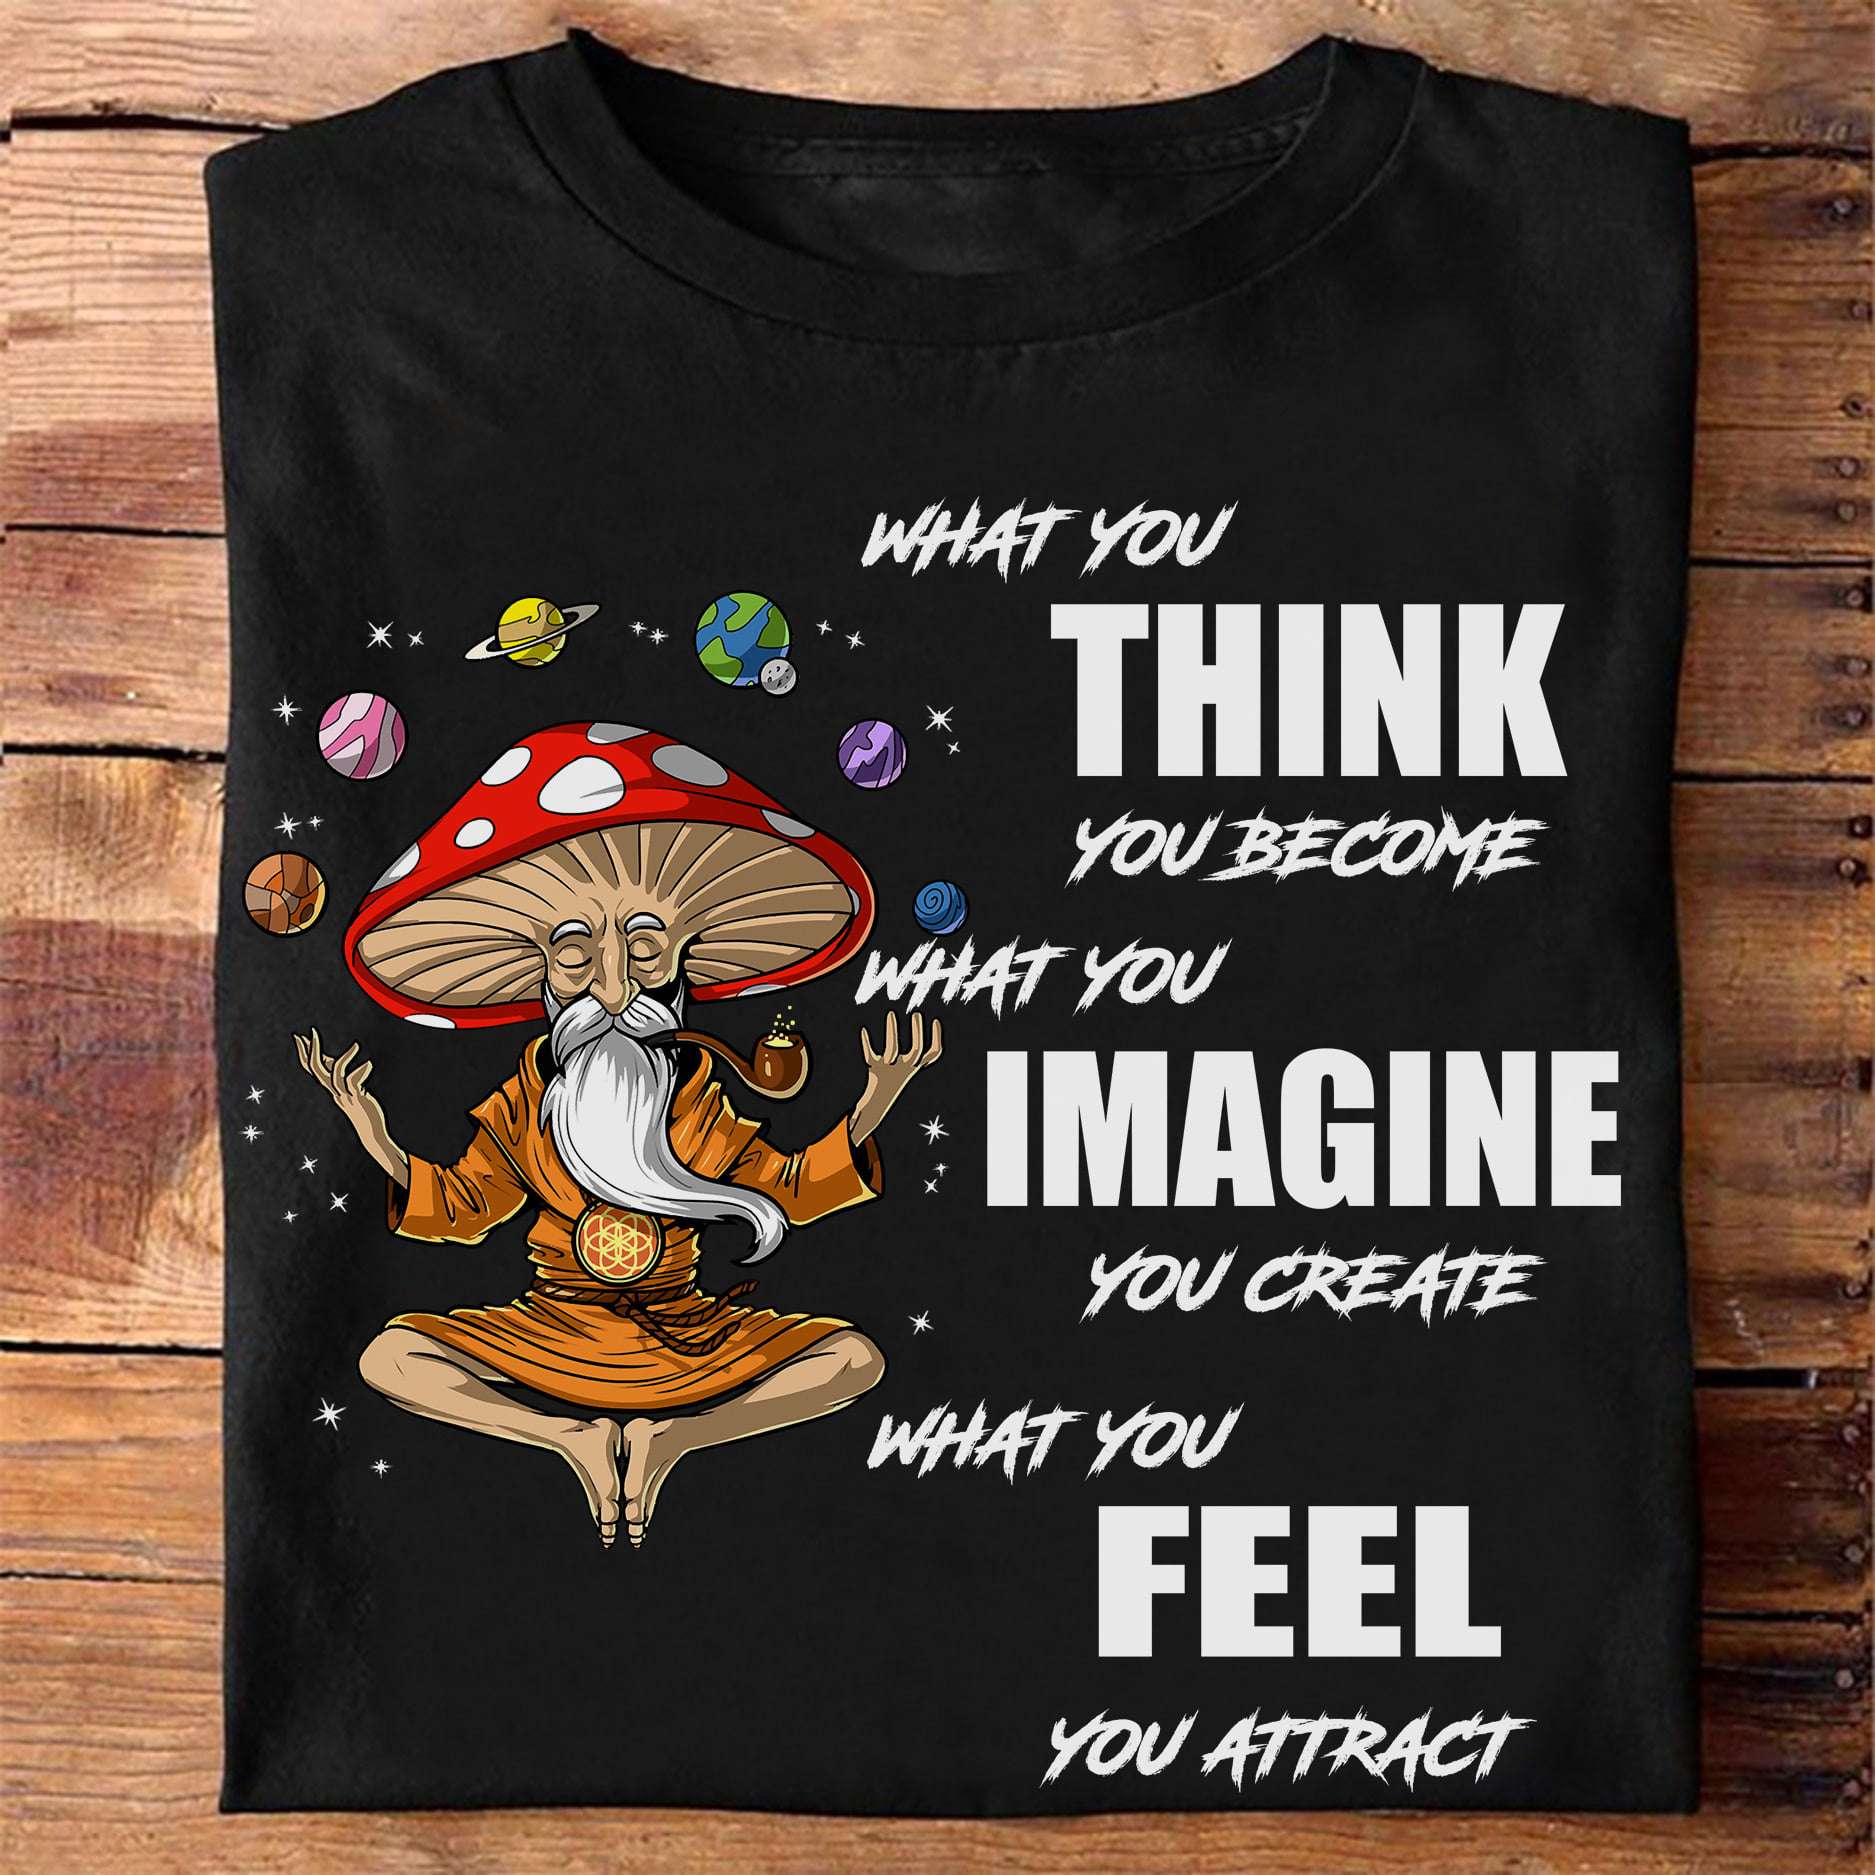 Mushroom Head Magician - What you think you become what you imagine you create what you feel you attract